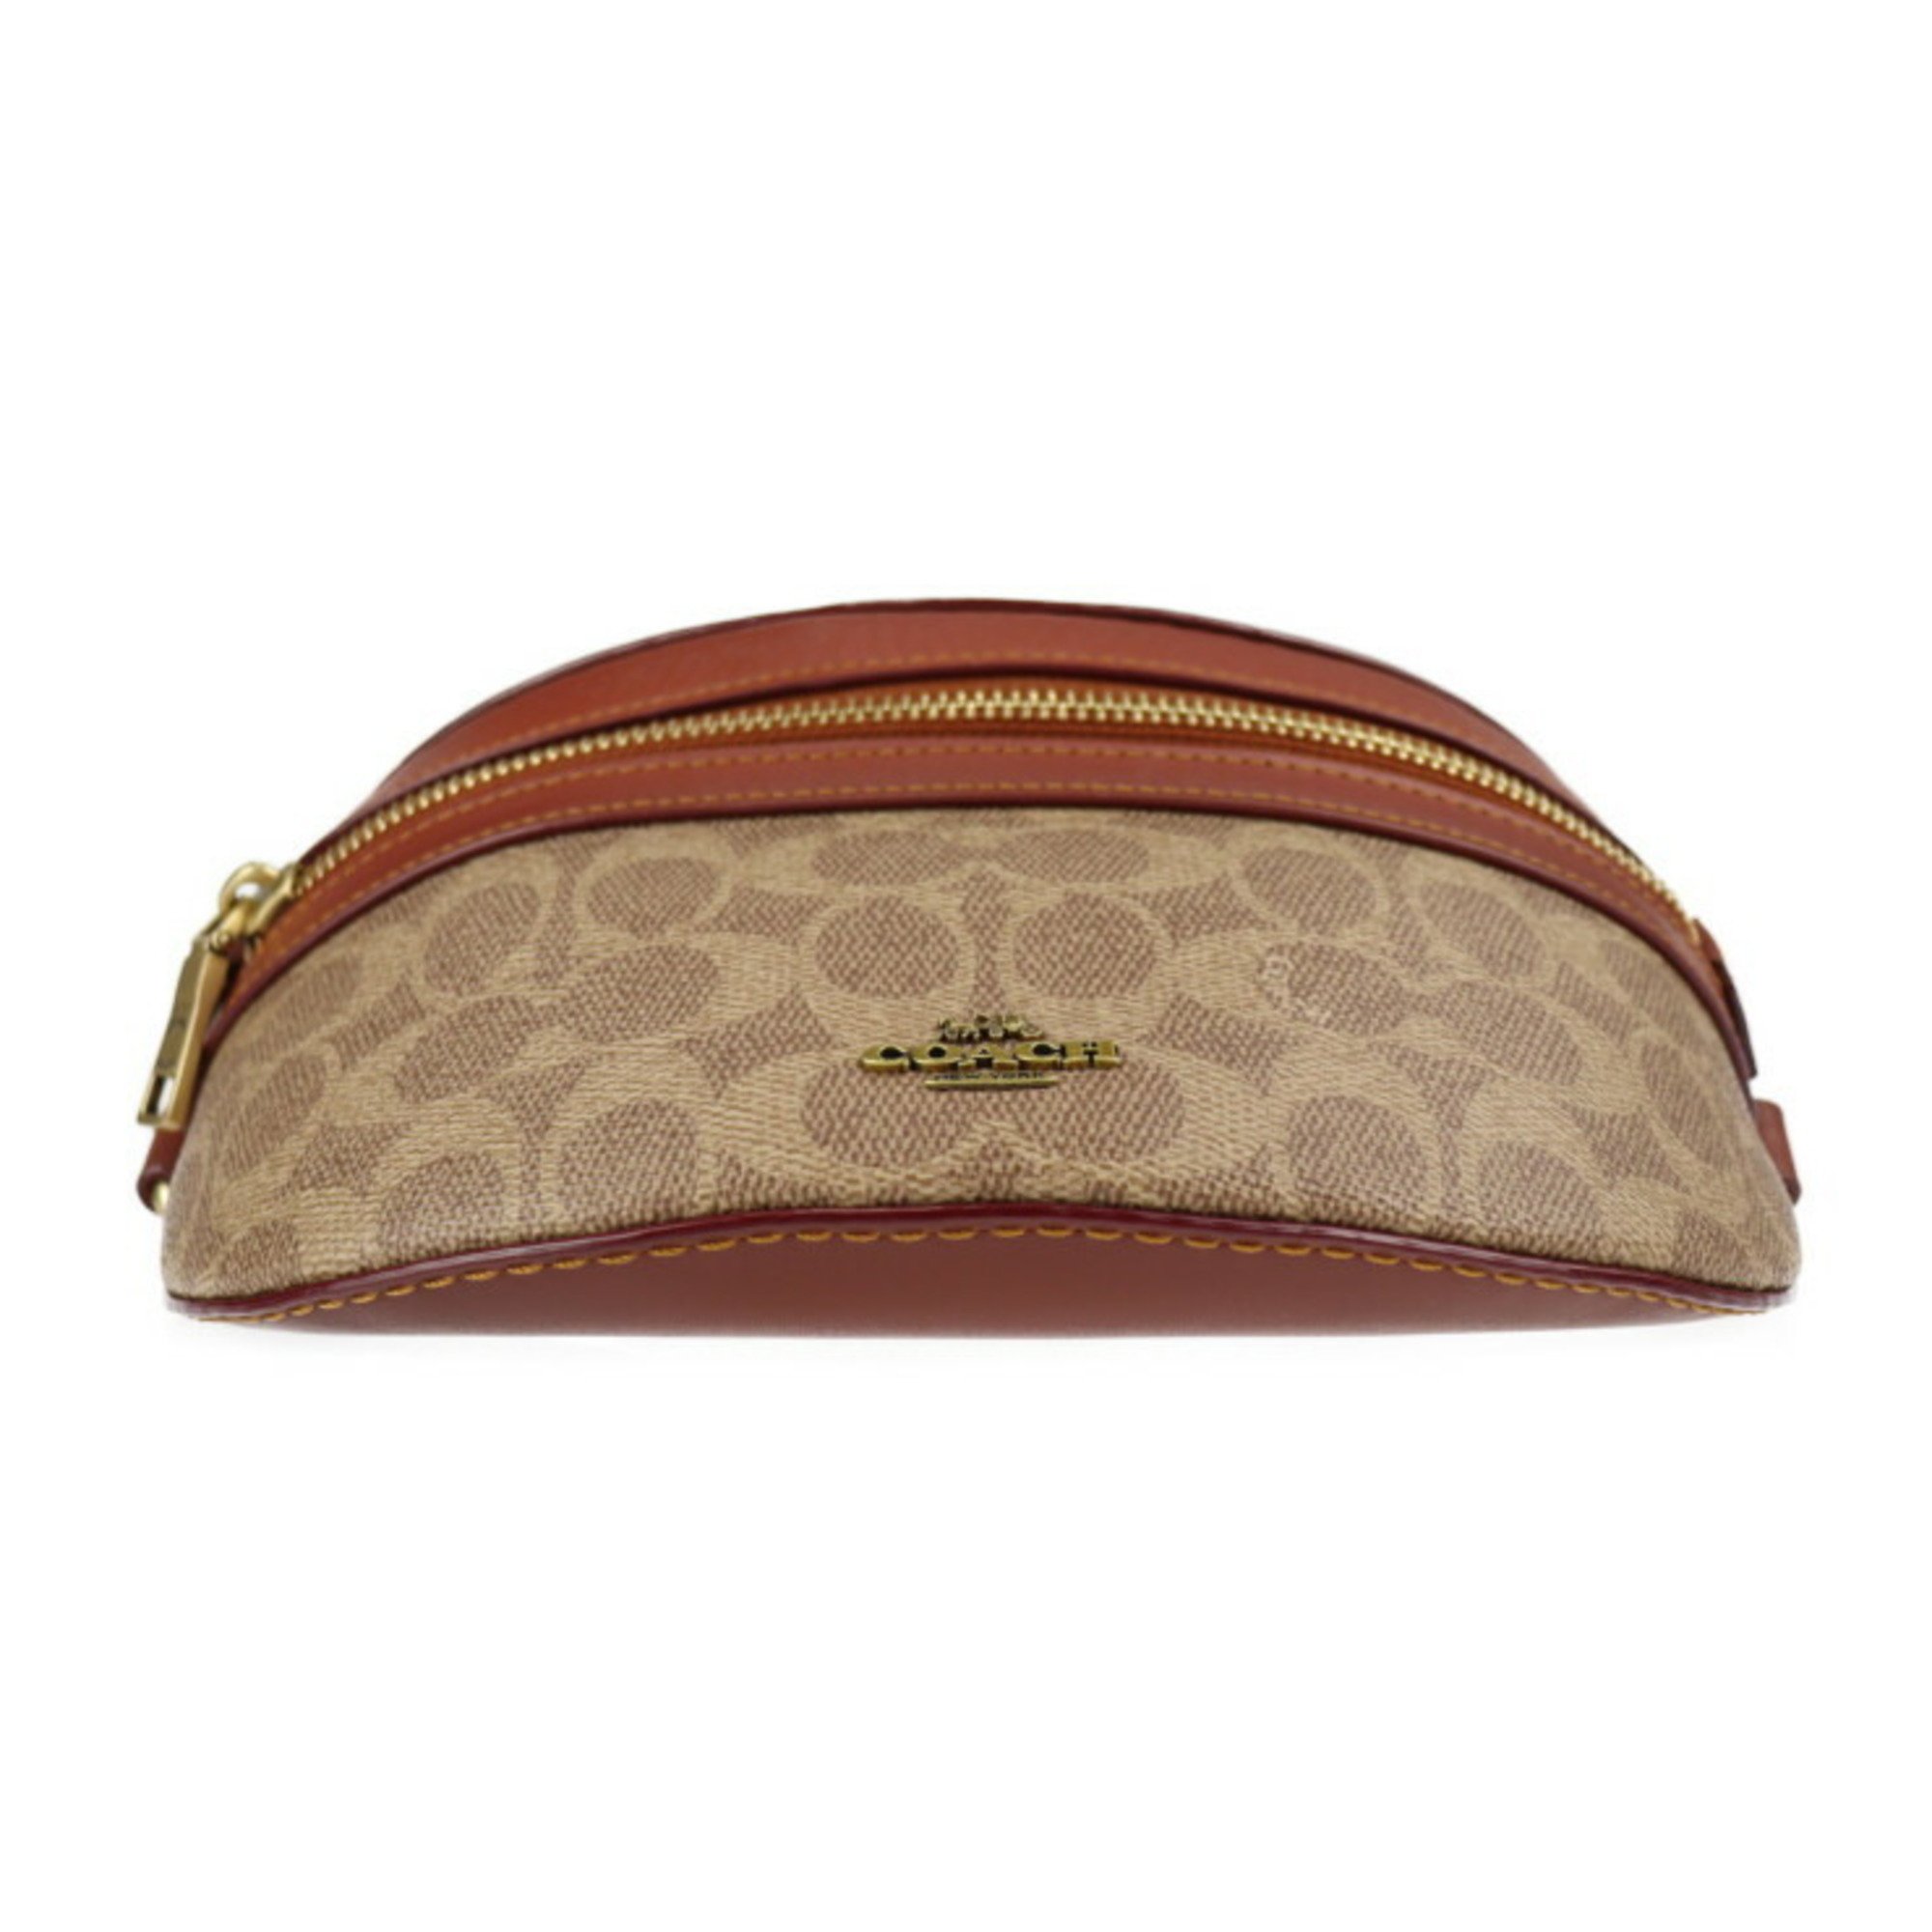 COACH Coach Signature Waist Bag 39937 PVC Leather Beige Brown Gold Hardware Body Pouch